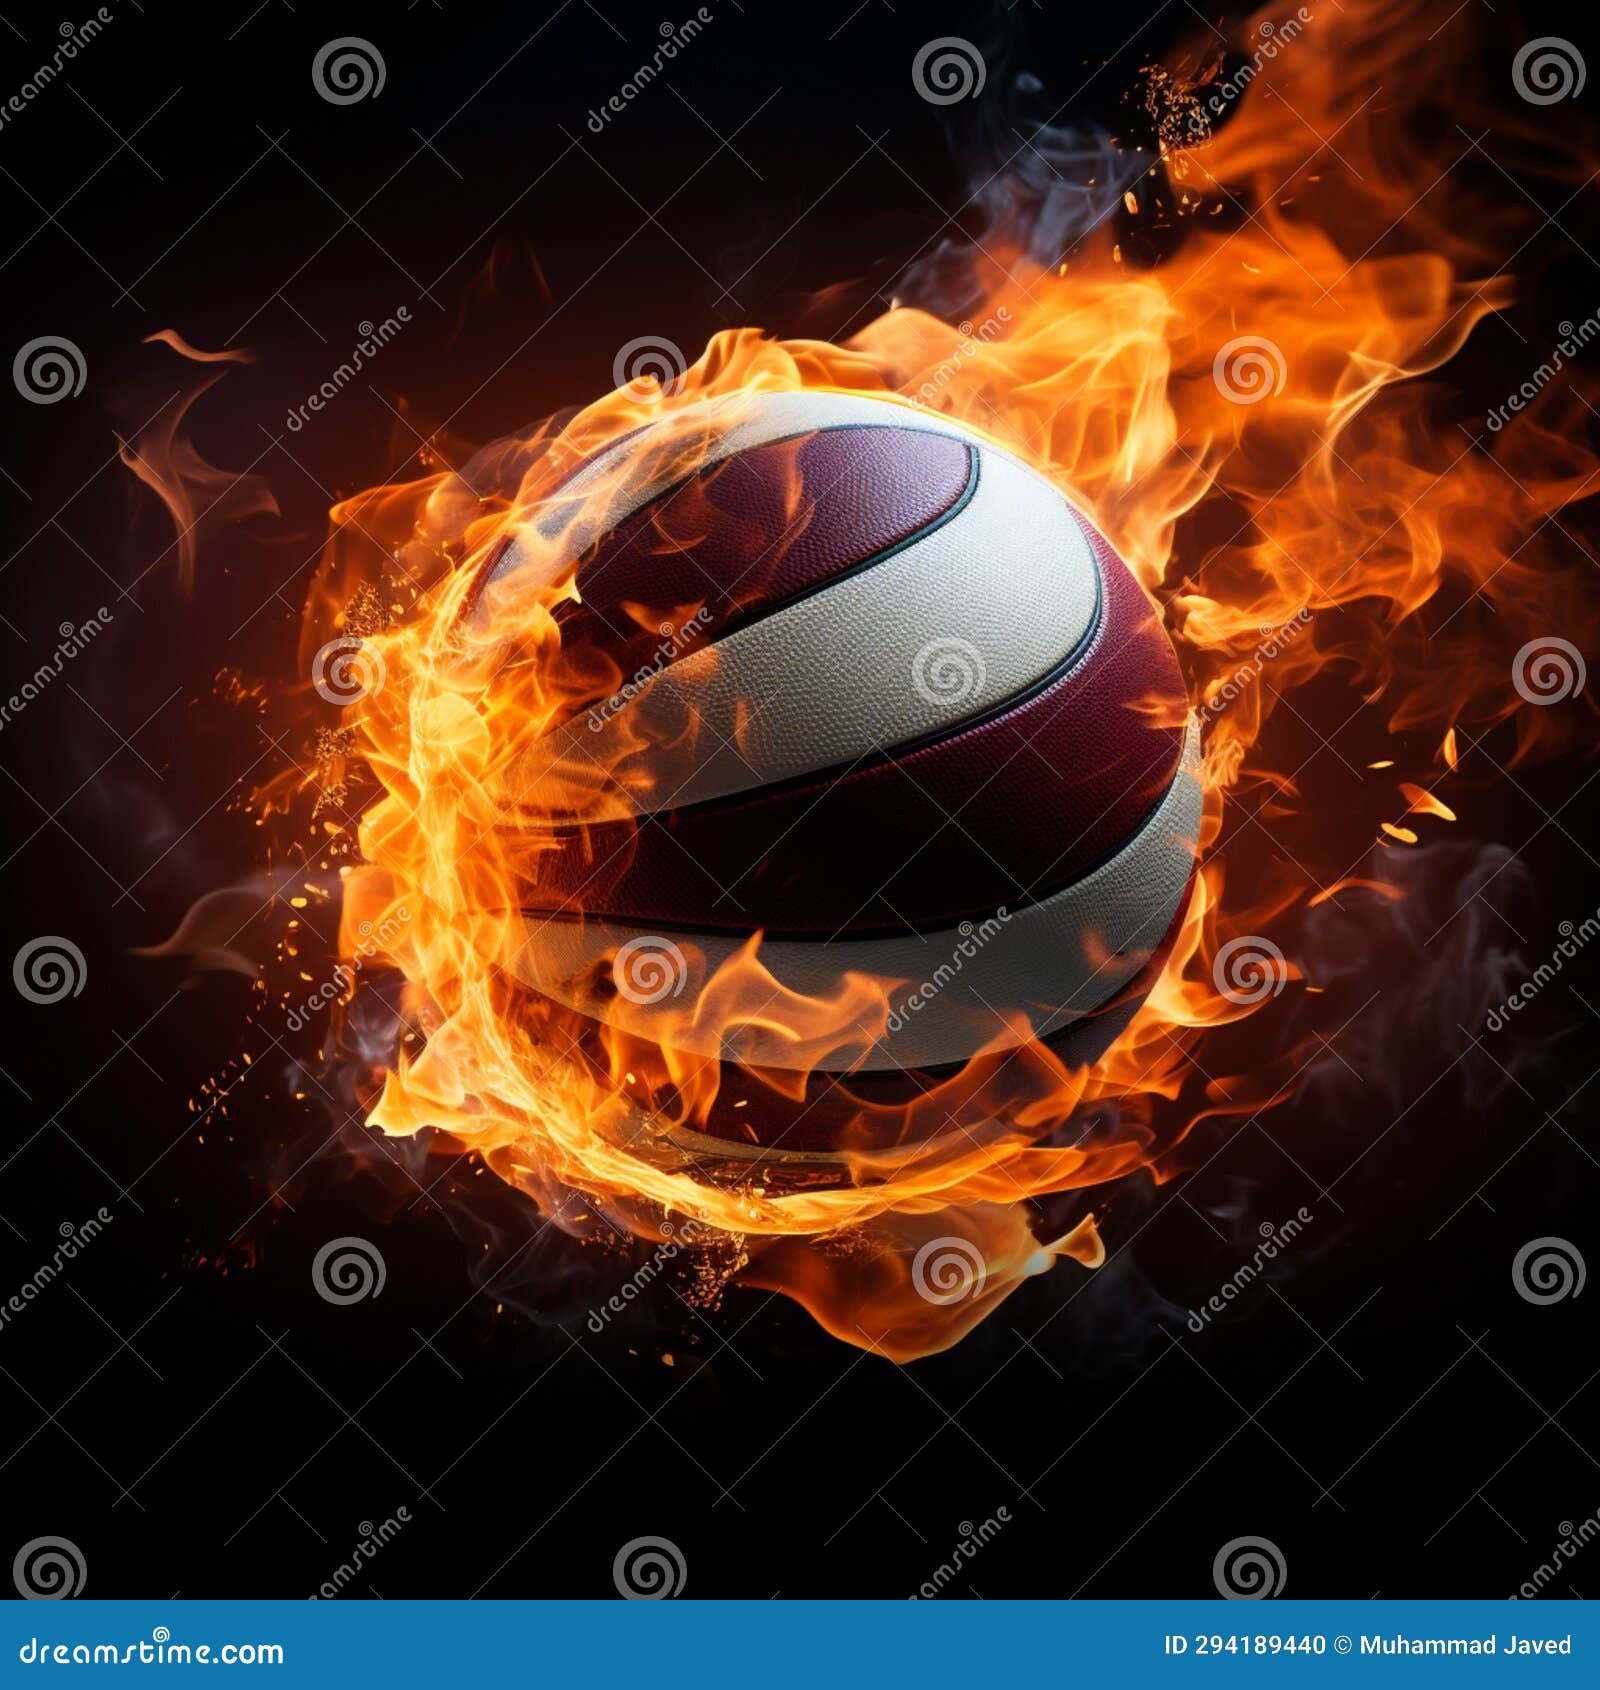 fiery fervor, volleyballs intensity portrayed through ball on dark backdrop